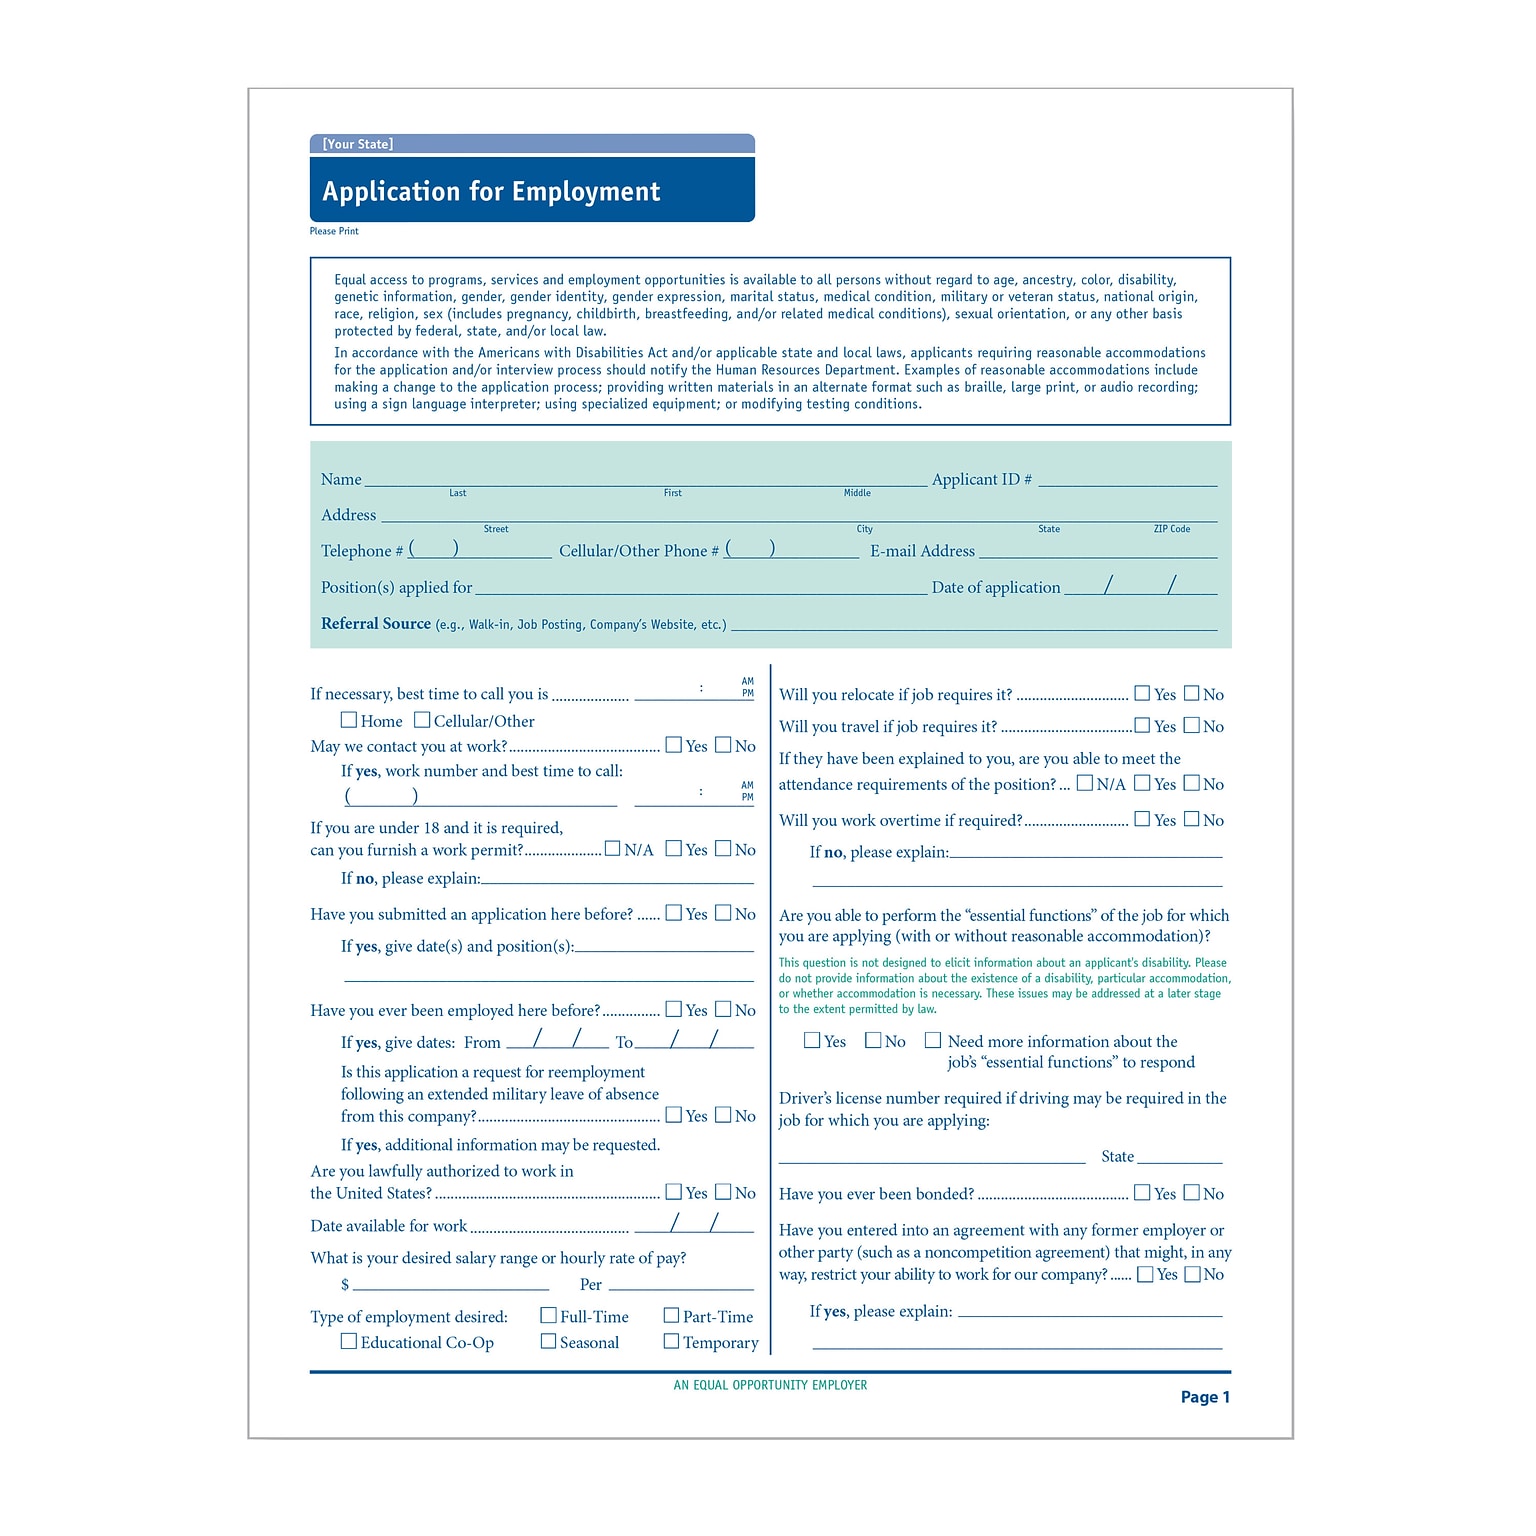 ComplyRight™ Alaska Job Application, Pack of 50 (A2179AK)